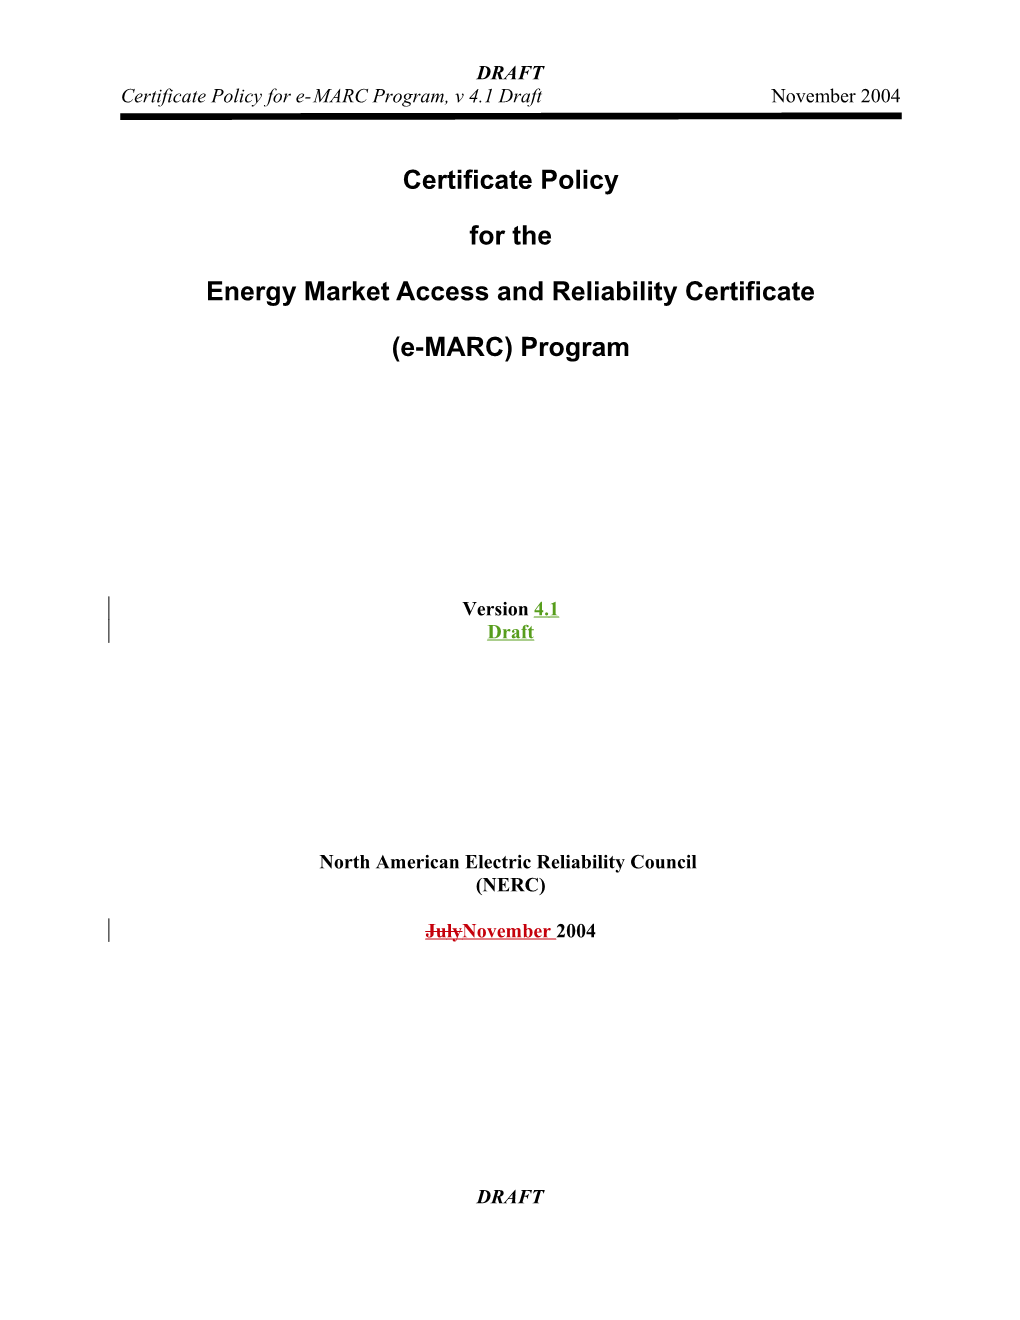 Certificate Policy for Emarc Program, V. 4.1 Draft November 2004